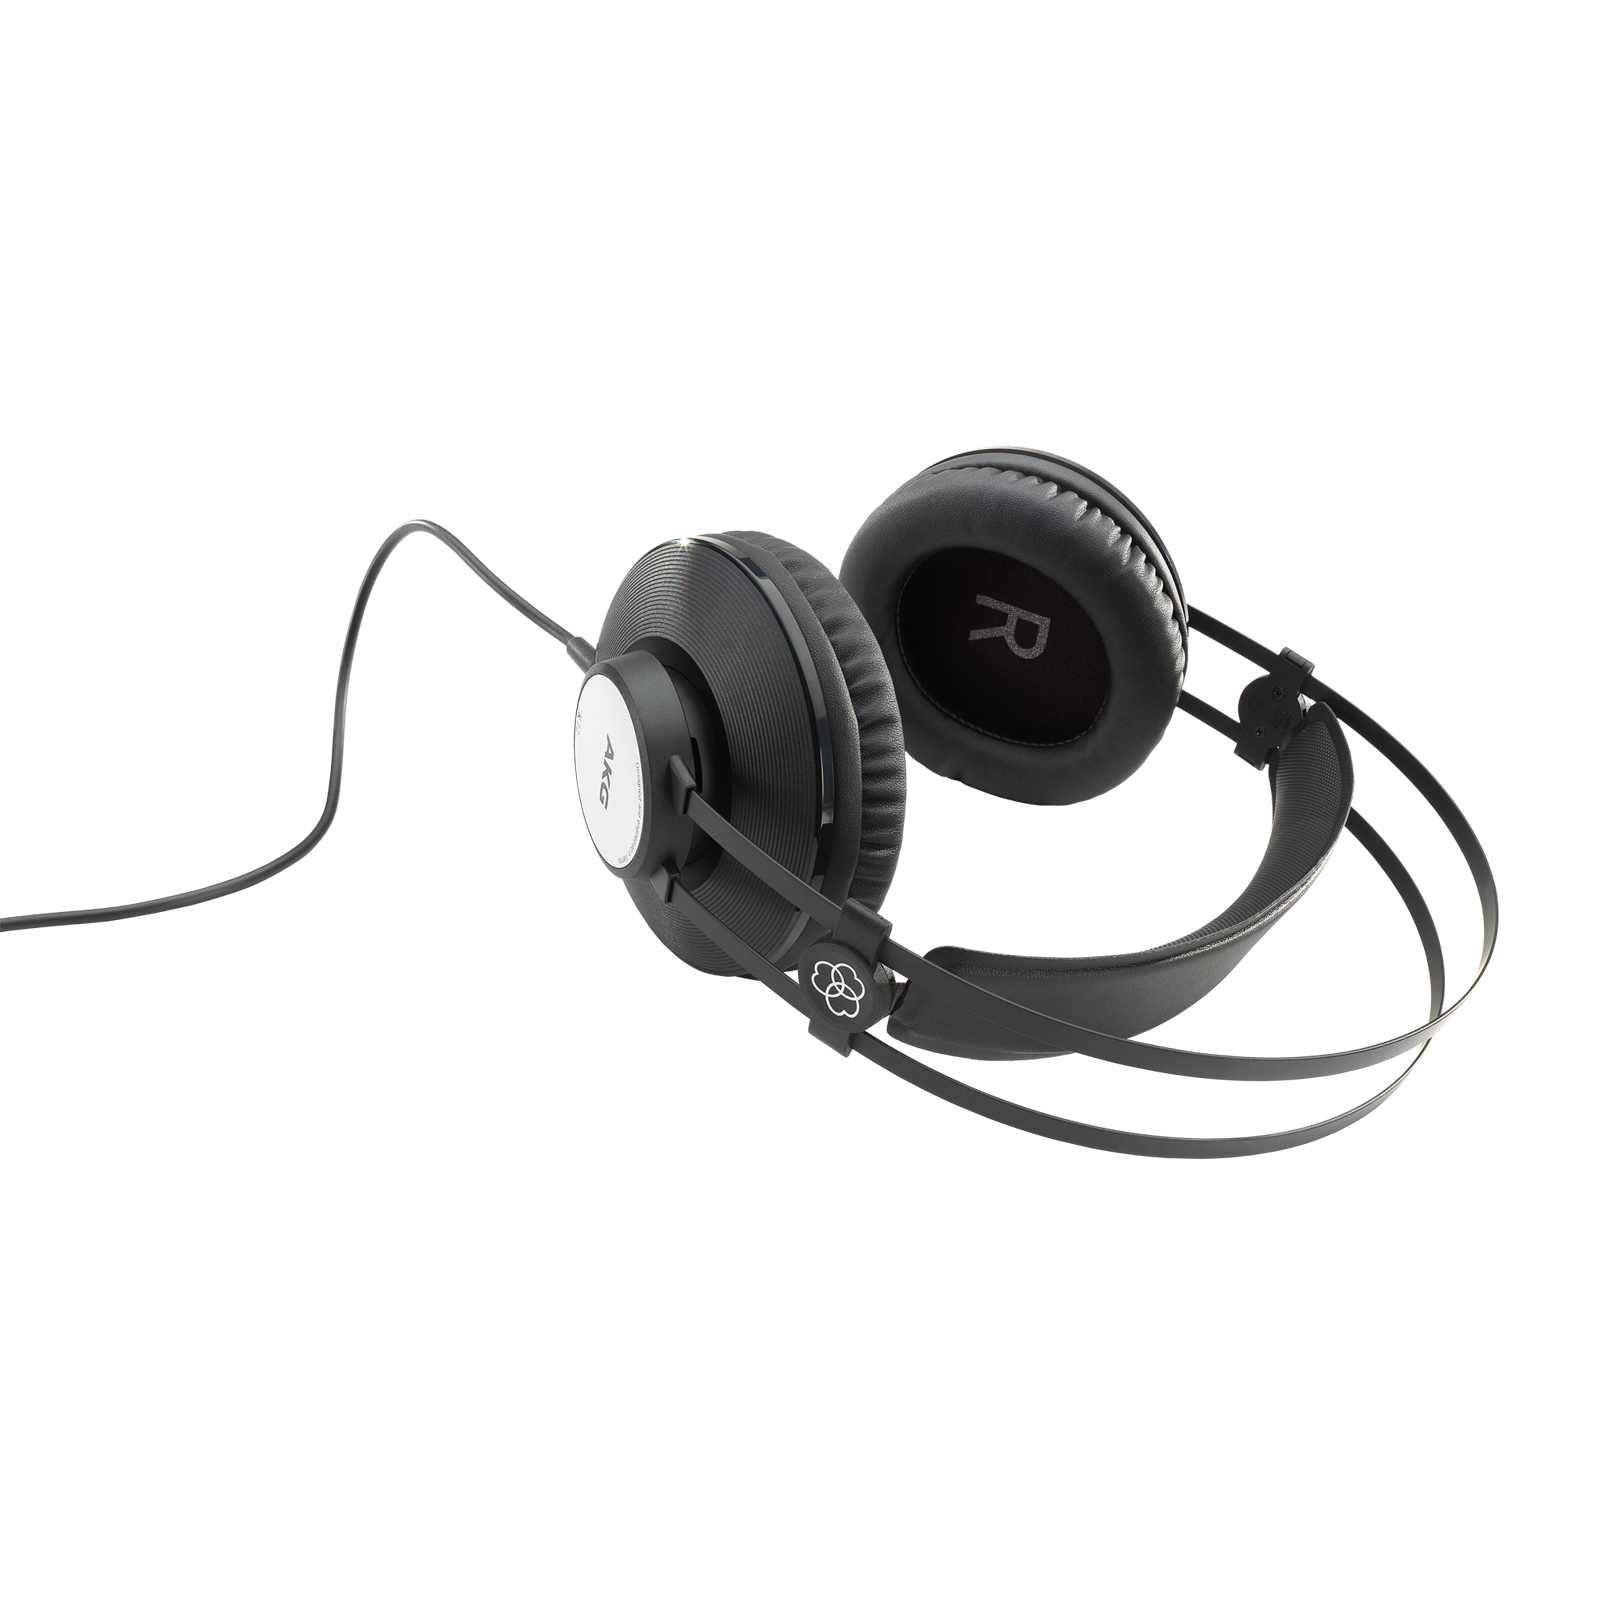 K72 - Black - Closed-back studio headphones - Detailshot 2